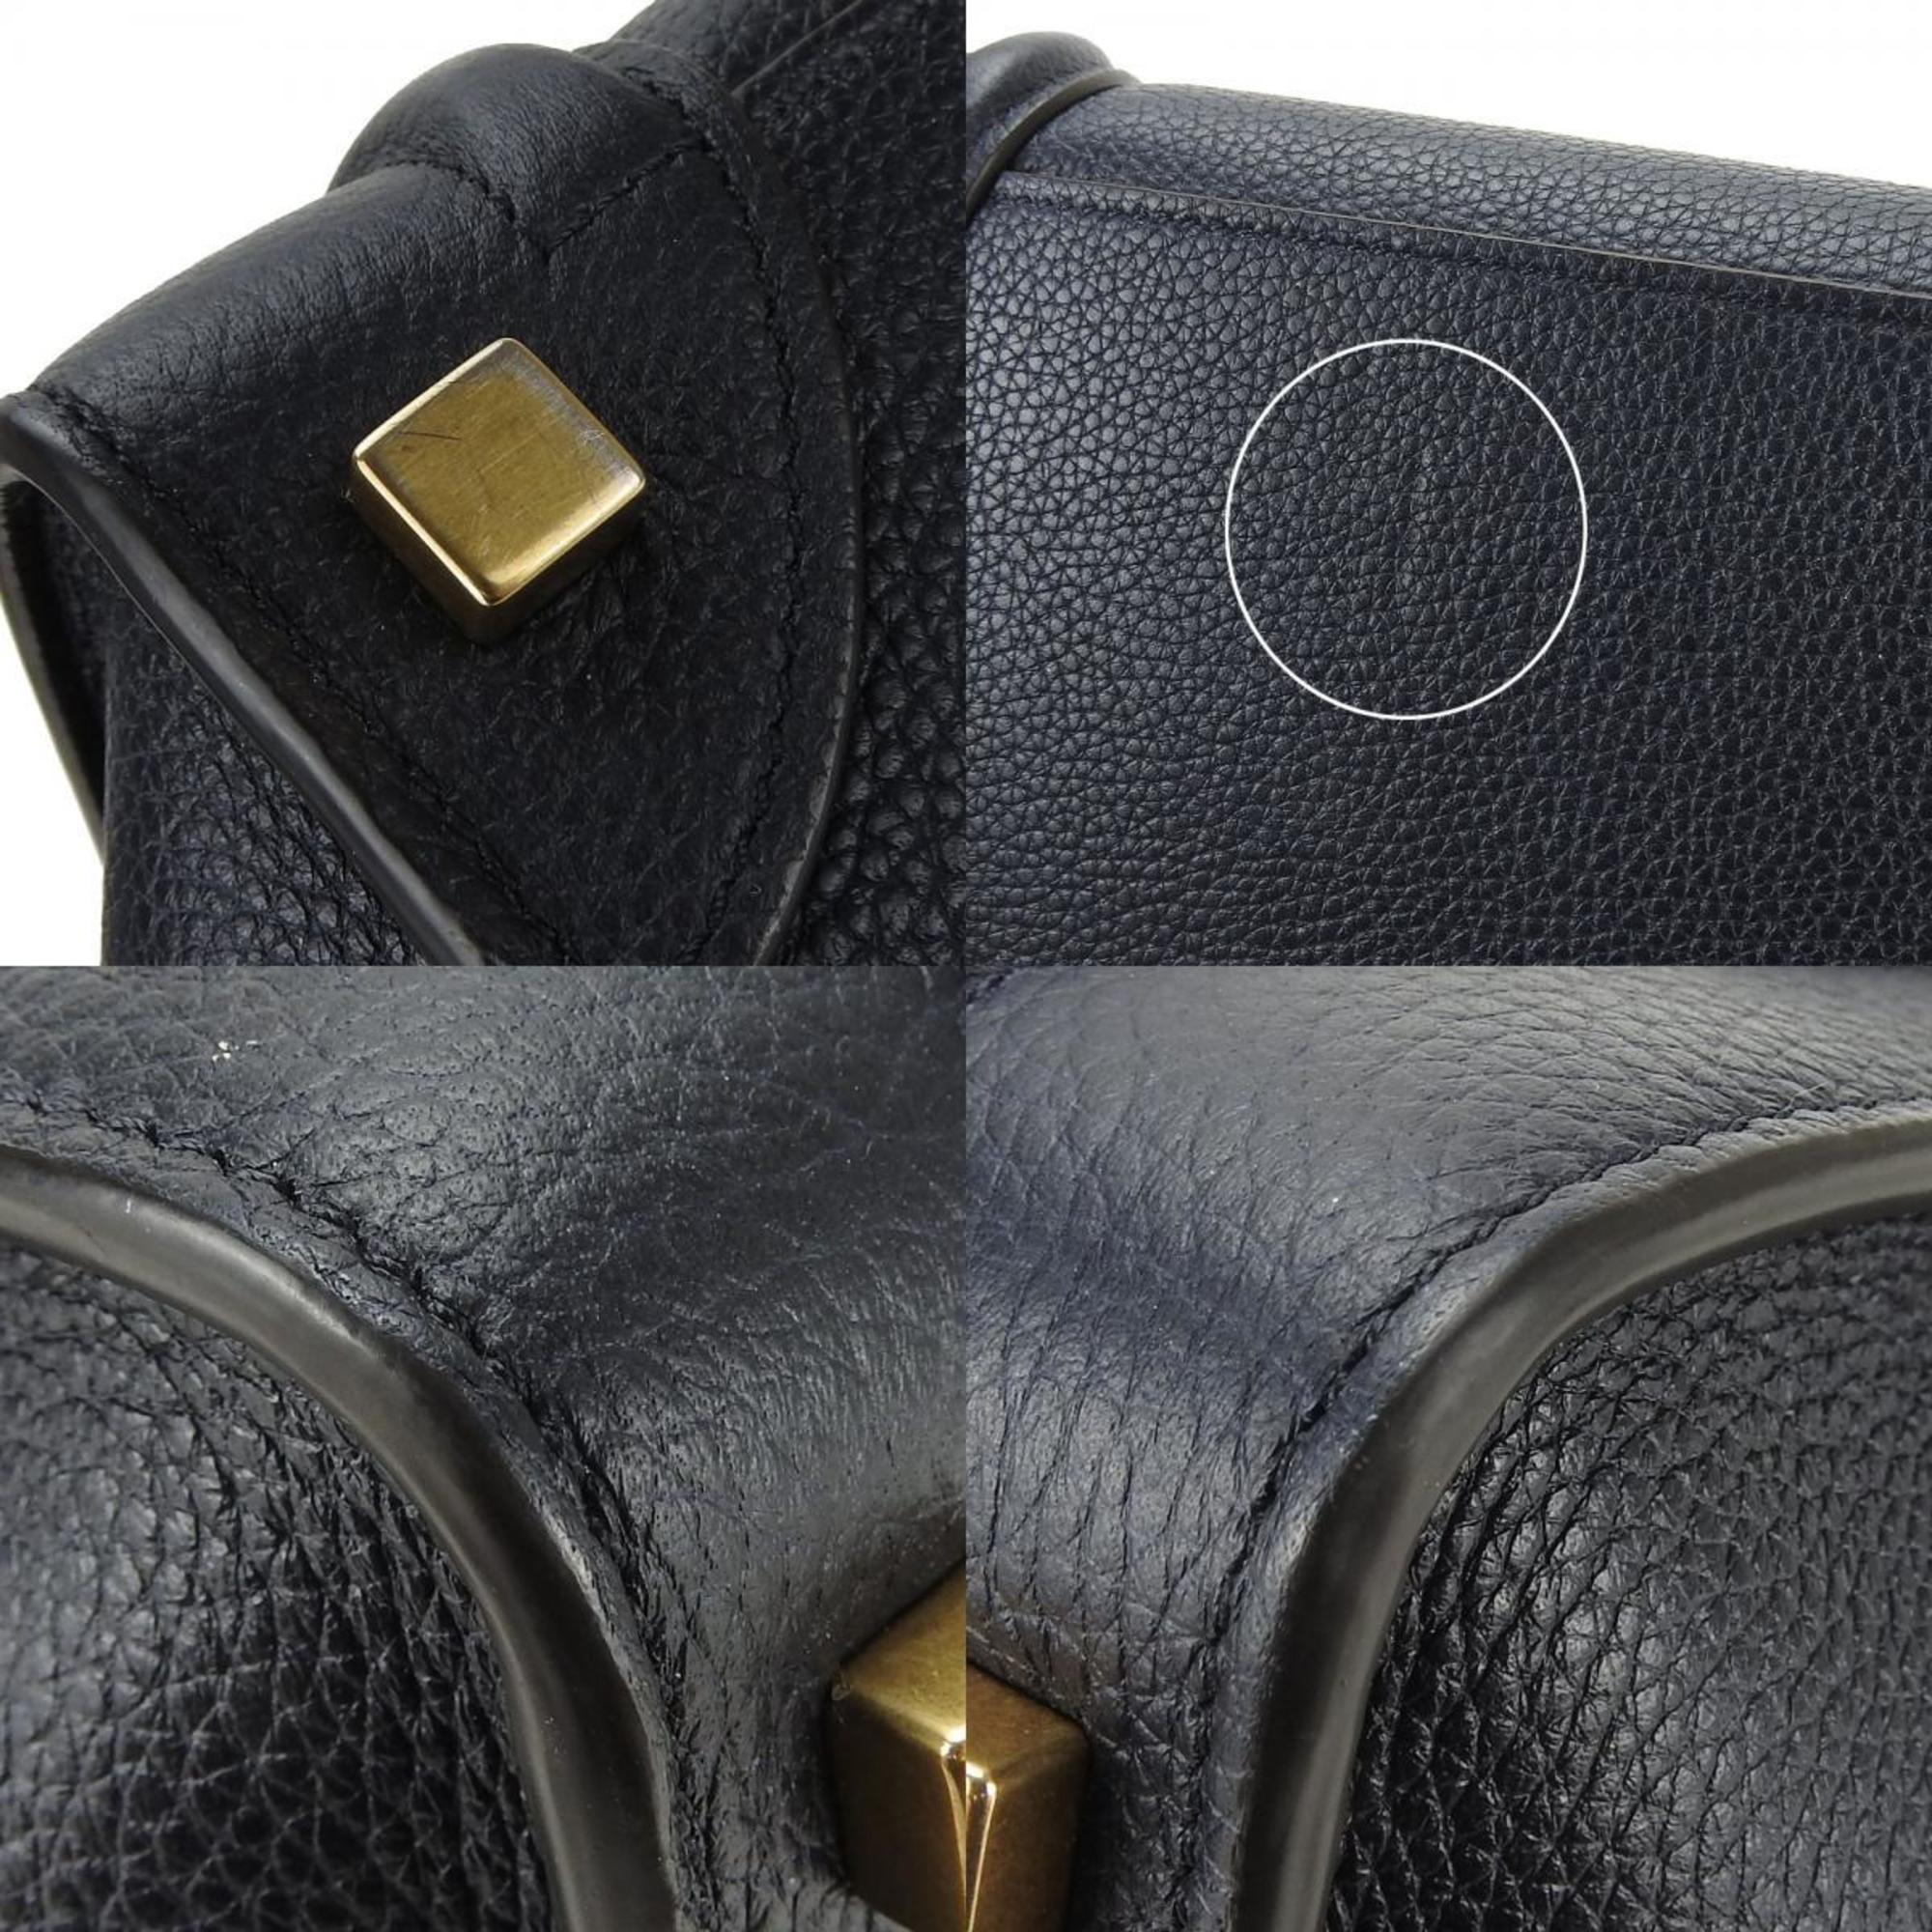 Celine handbag luggage micro shopper leather navy women's CELINE